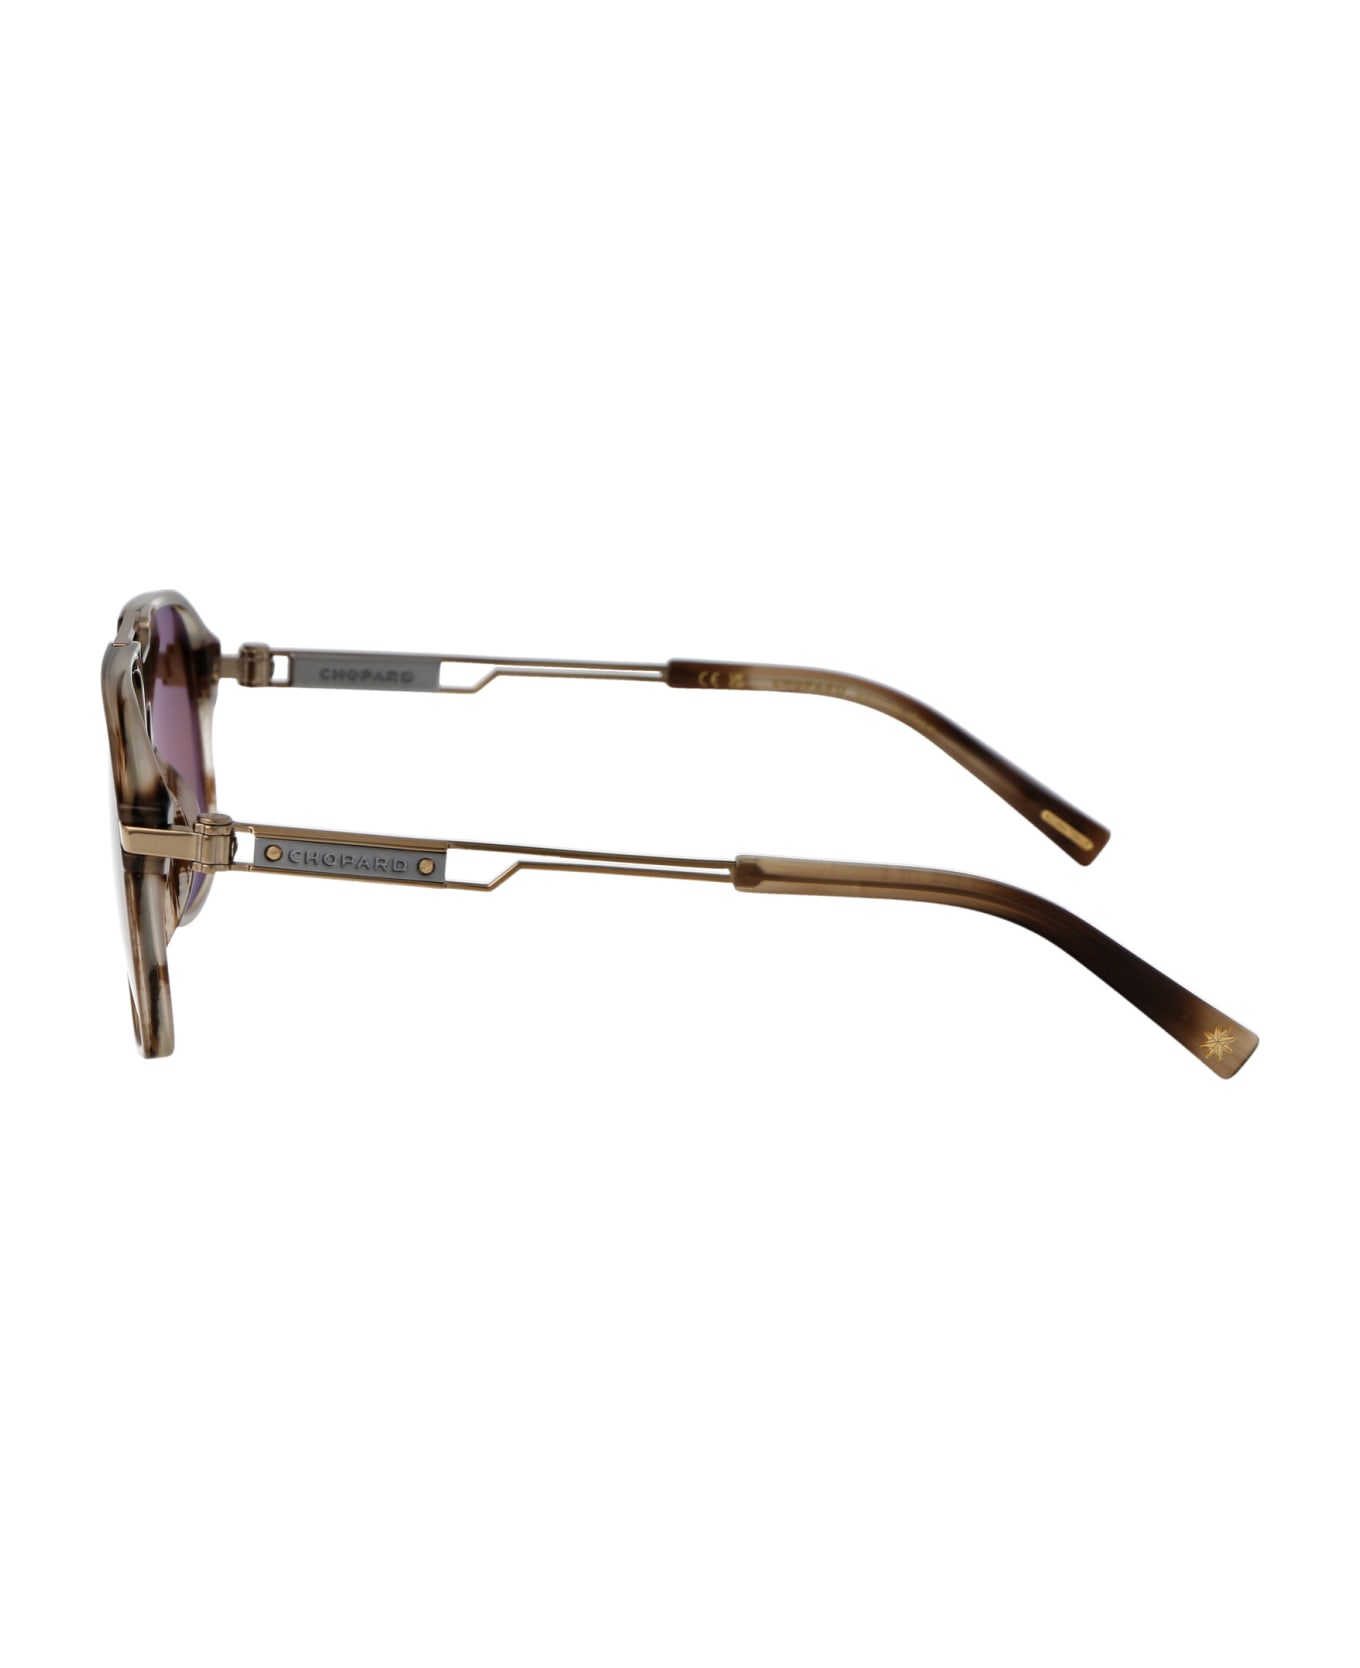 Chopard Sch347 Sunglasses - 6YHP BROWN サングラス